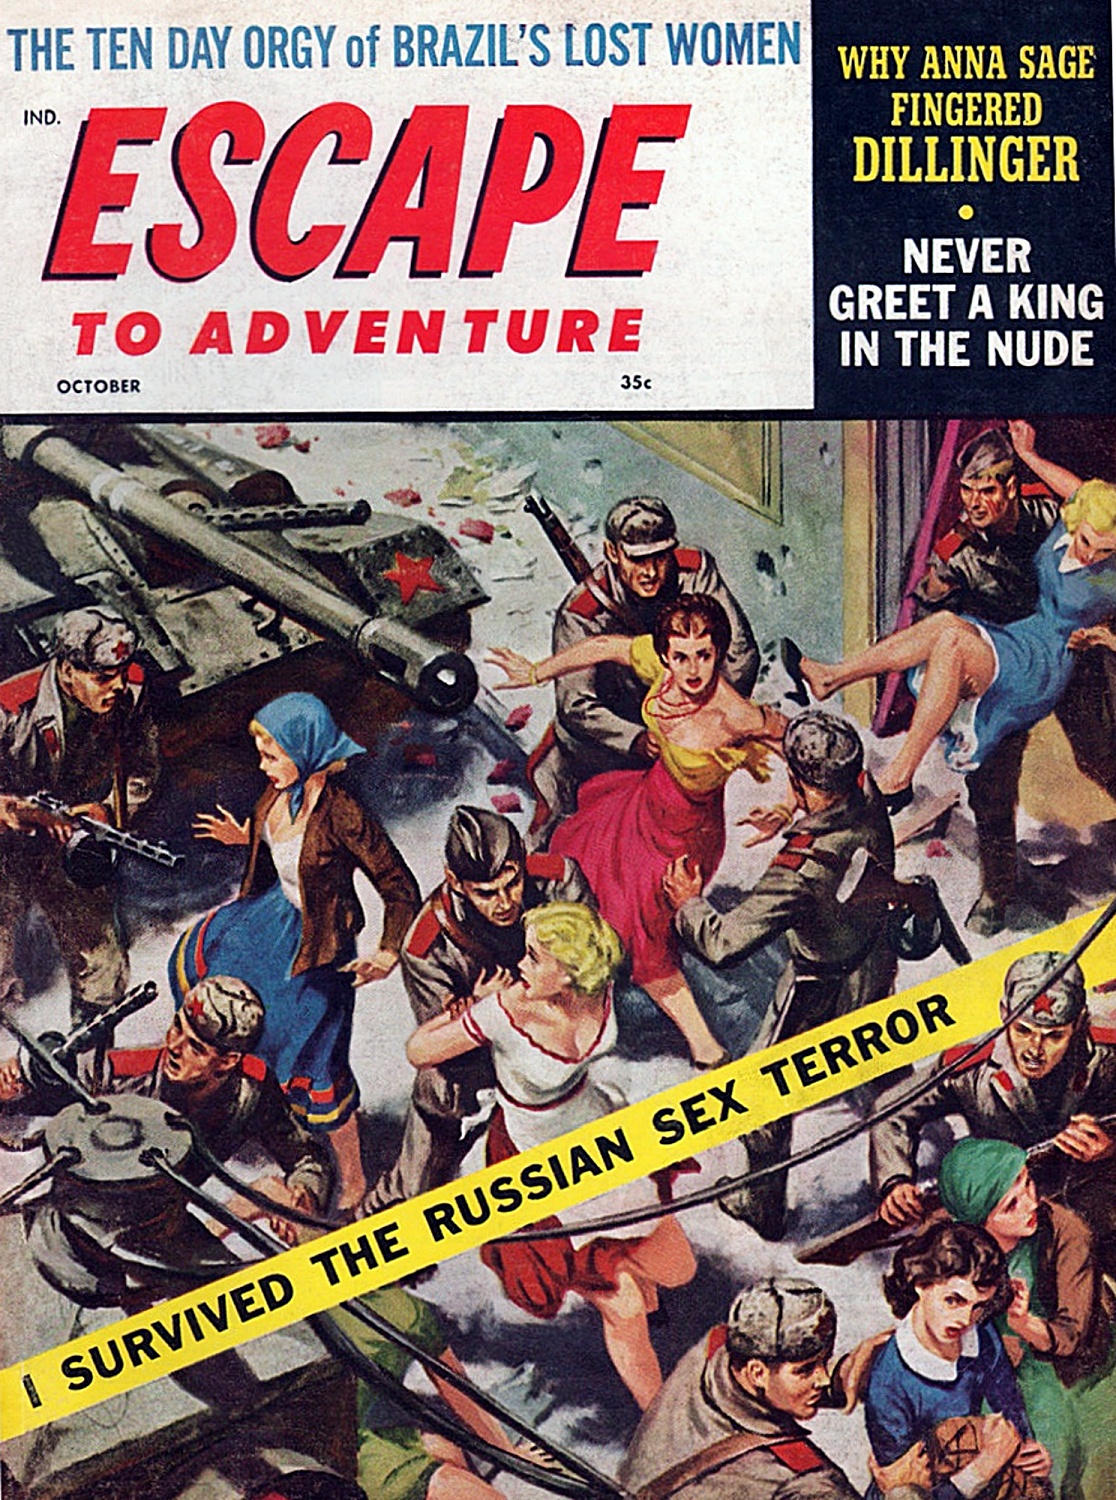 ‘I survived the Russian sex terror’ (Magazine front cover/ comic for Escape to Adventure/ Escape Magazines. United States of America, October 1960).